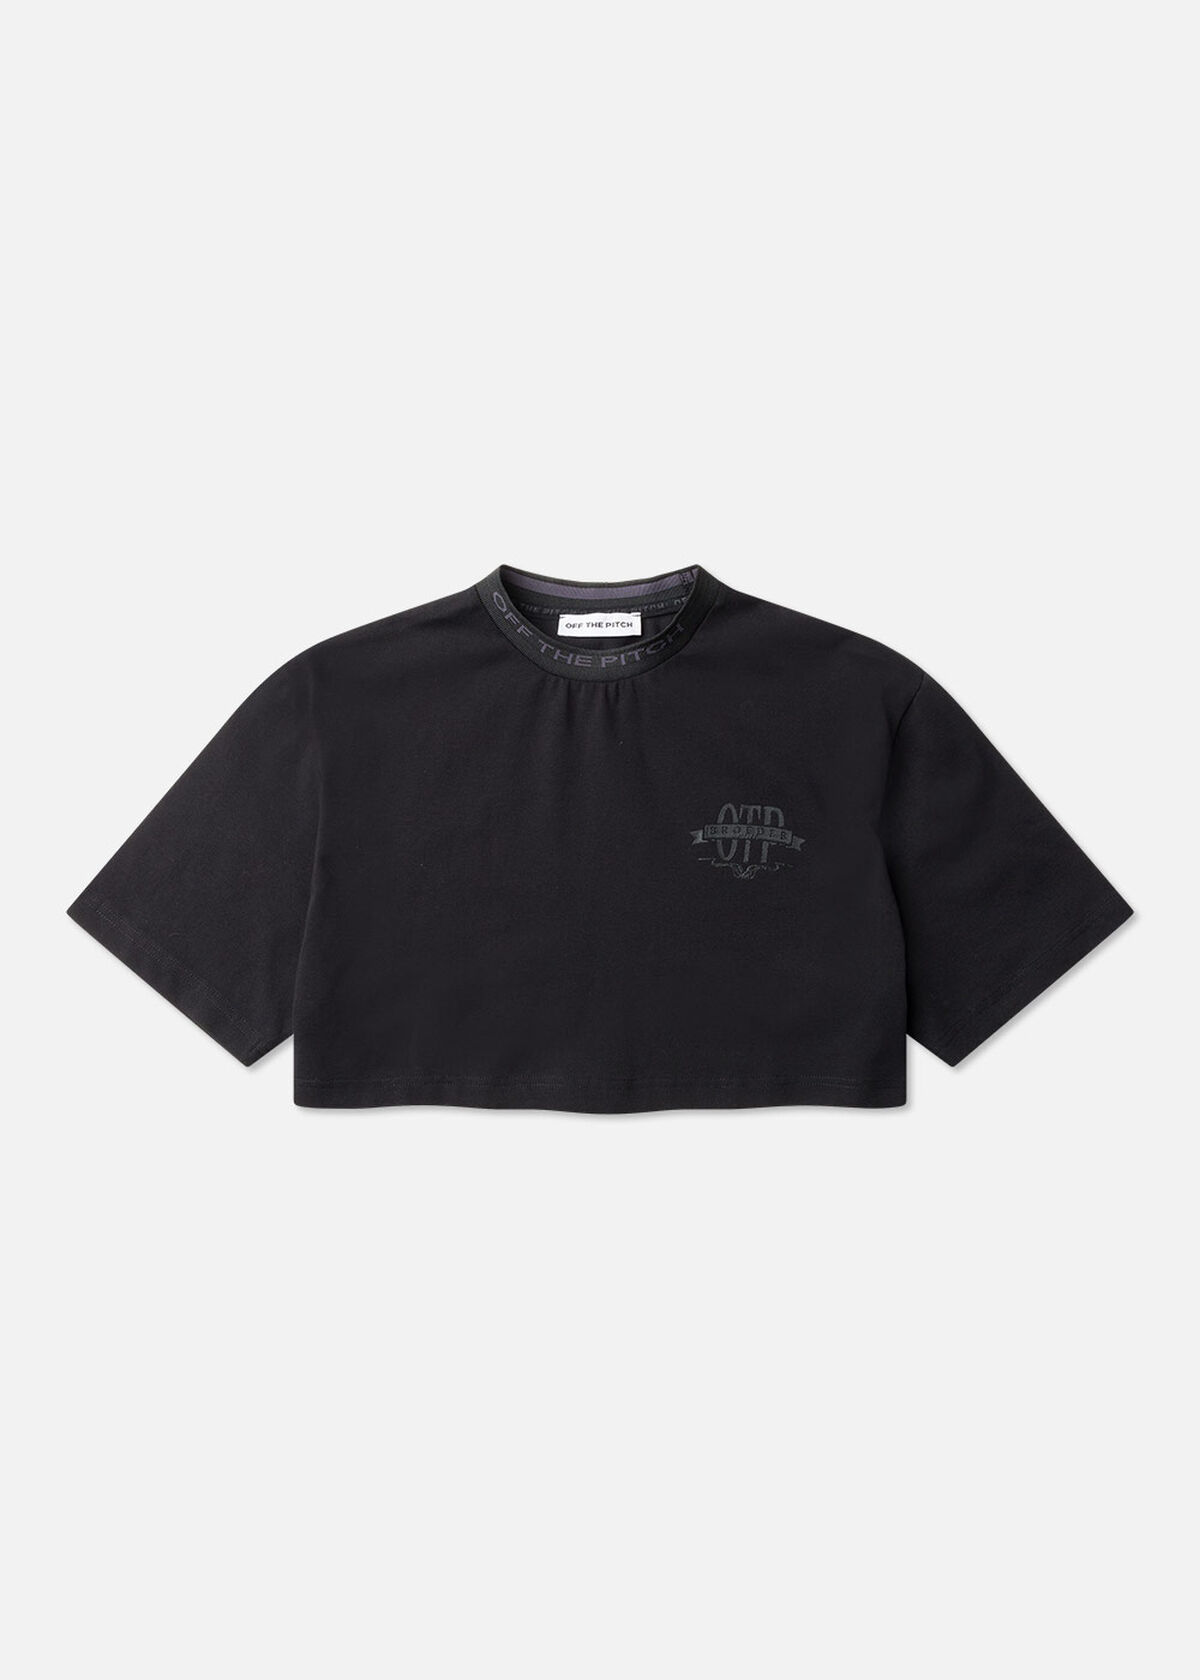 OTP BL Crop T-shirt, Black, hi-res